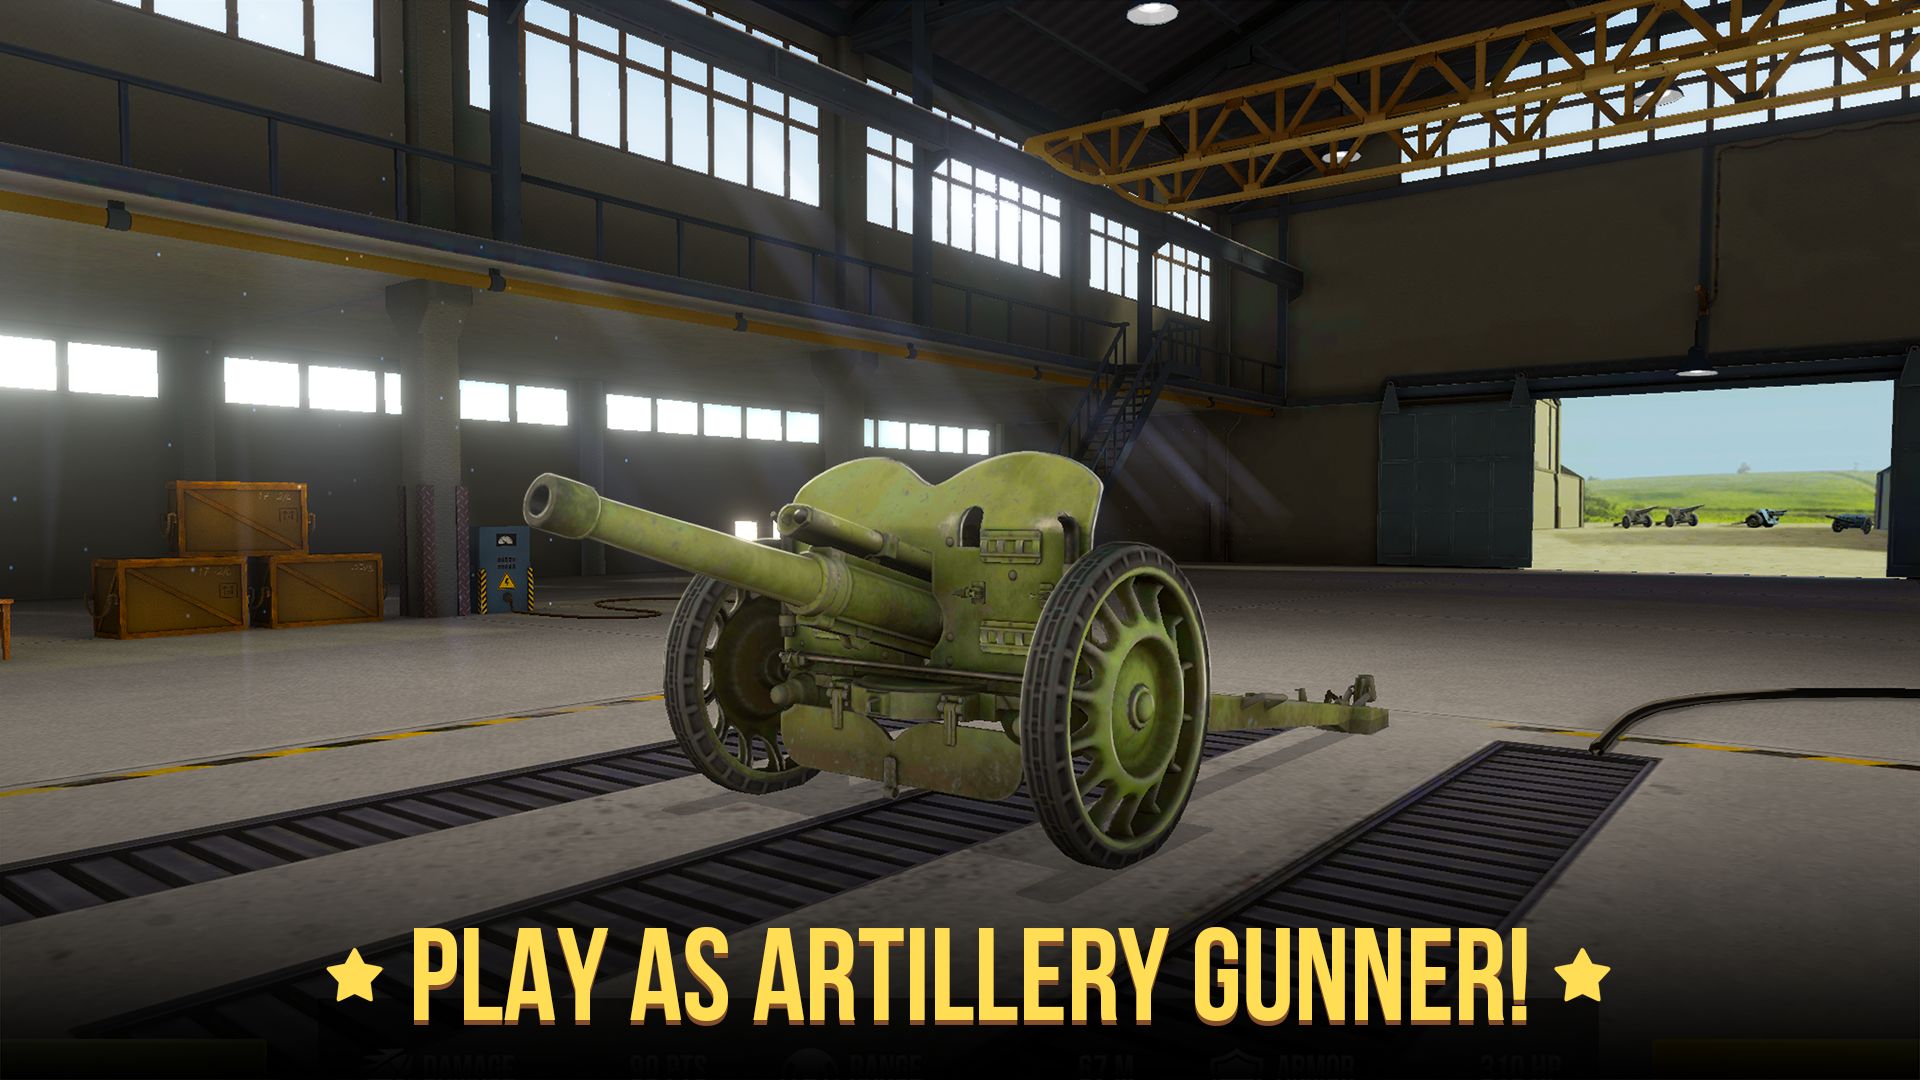 Download World of Artillery: Cannon für Android kostenlos.